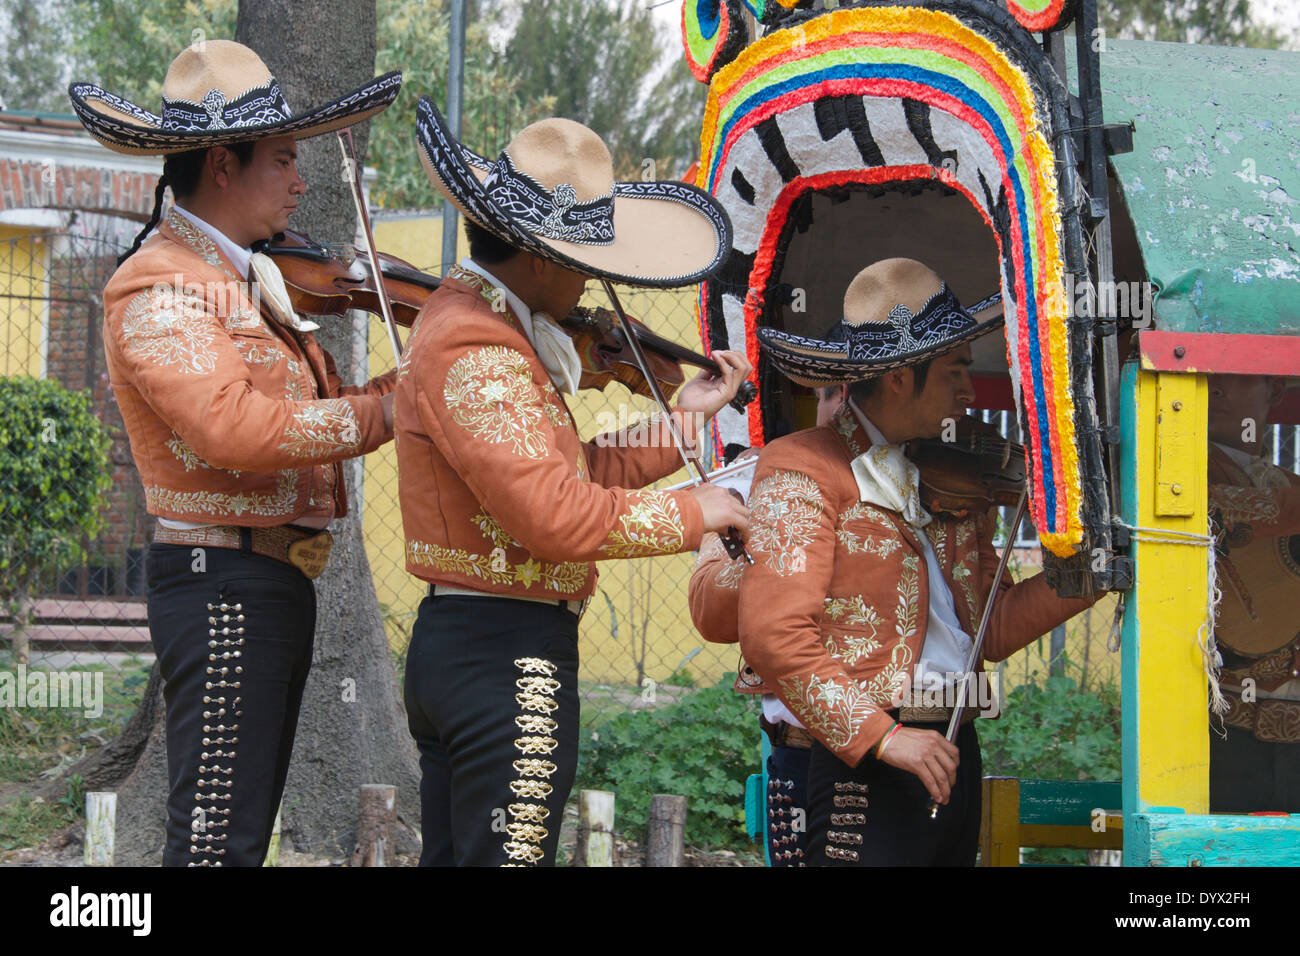 Drei mexikanischen Geiger in National Kostüm Xochmilco Mexico City-Mexiko Stockfoto